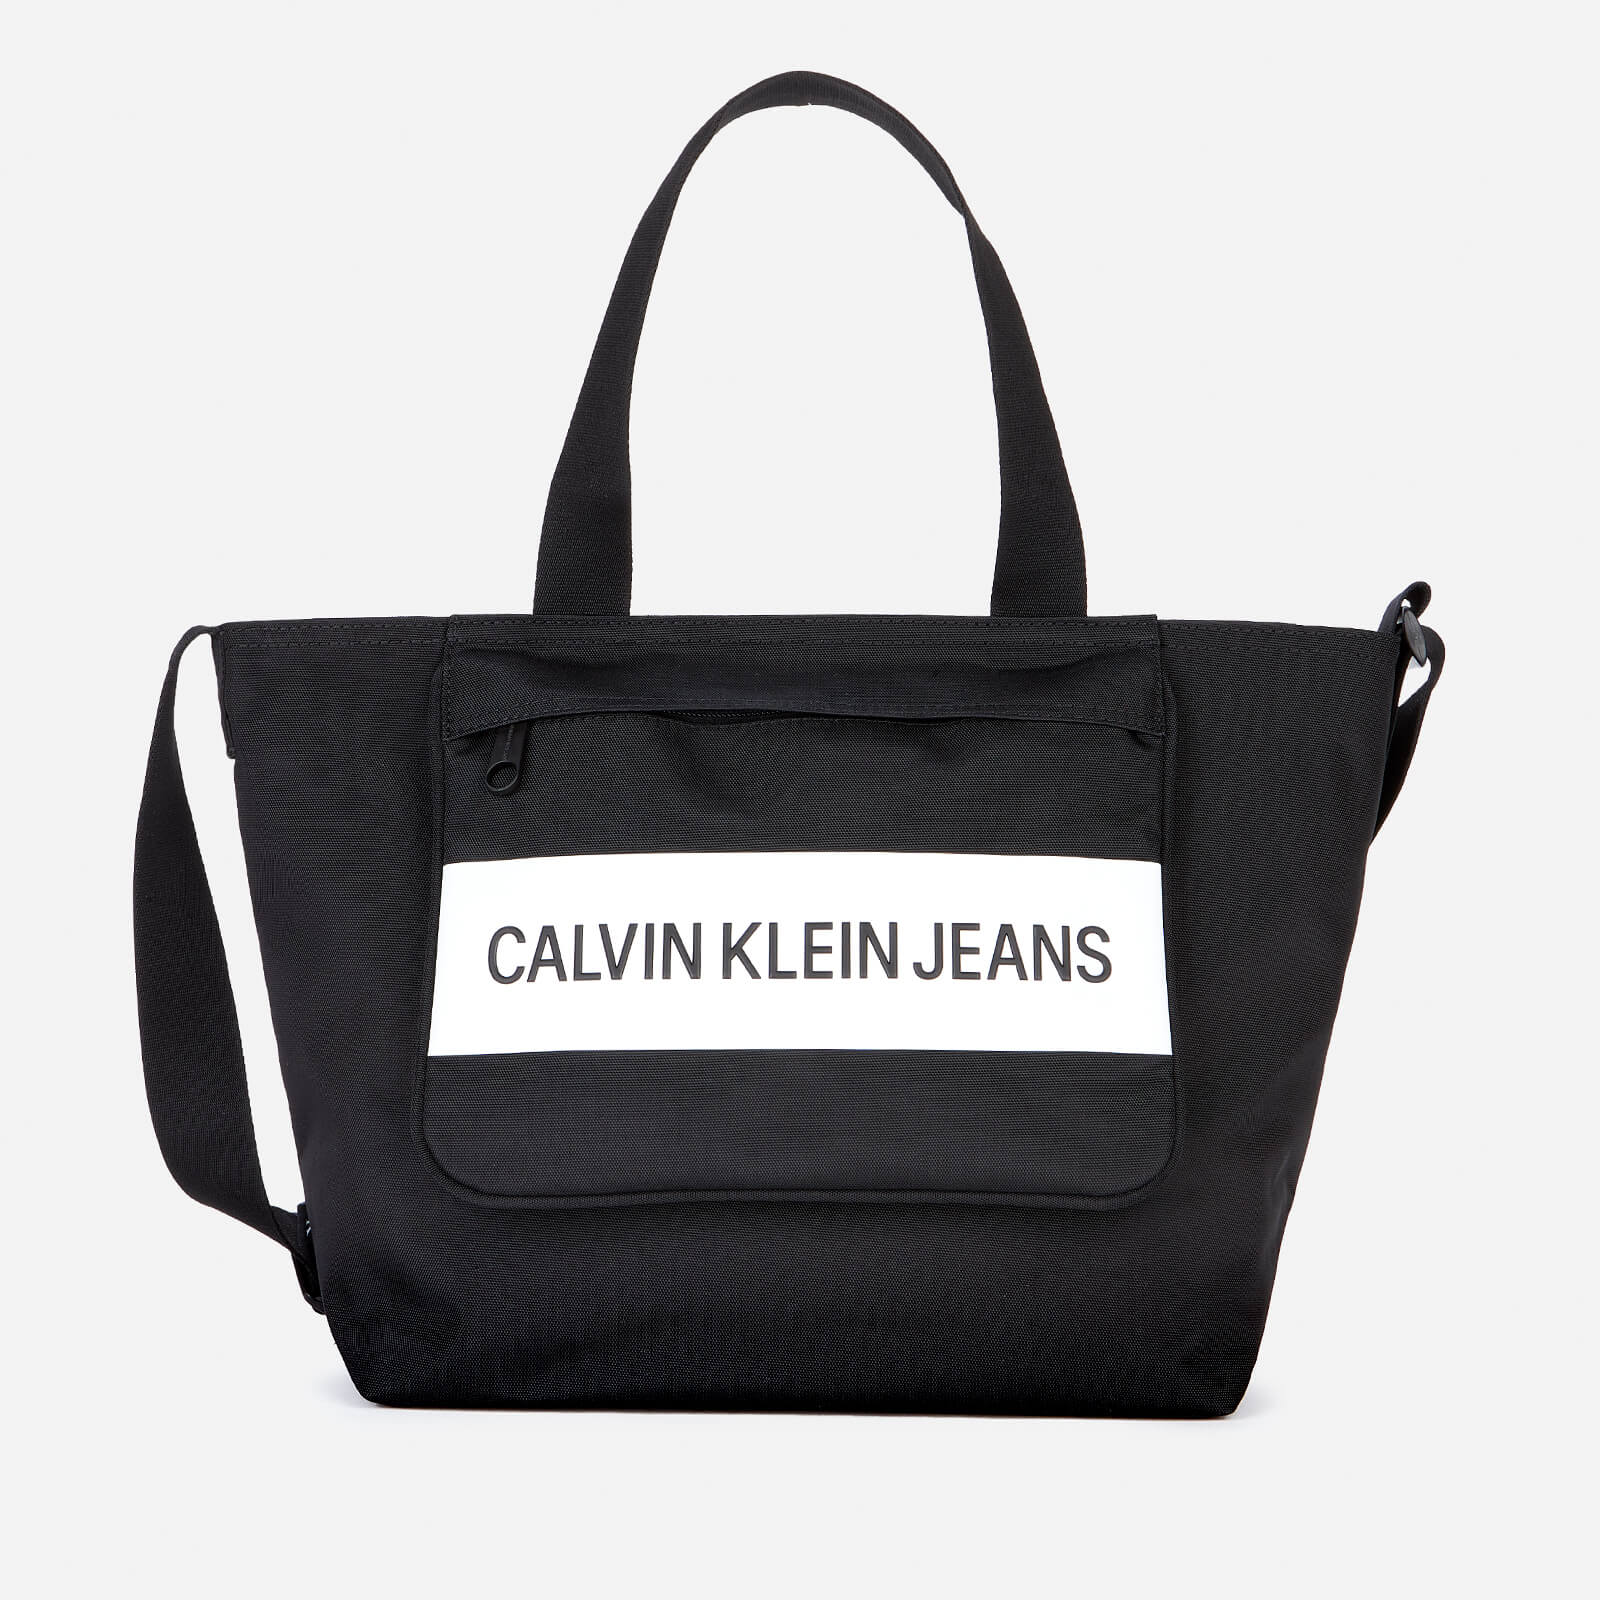 Calvin Klein Jeans Women's Shopper29 - Black